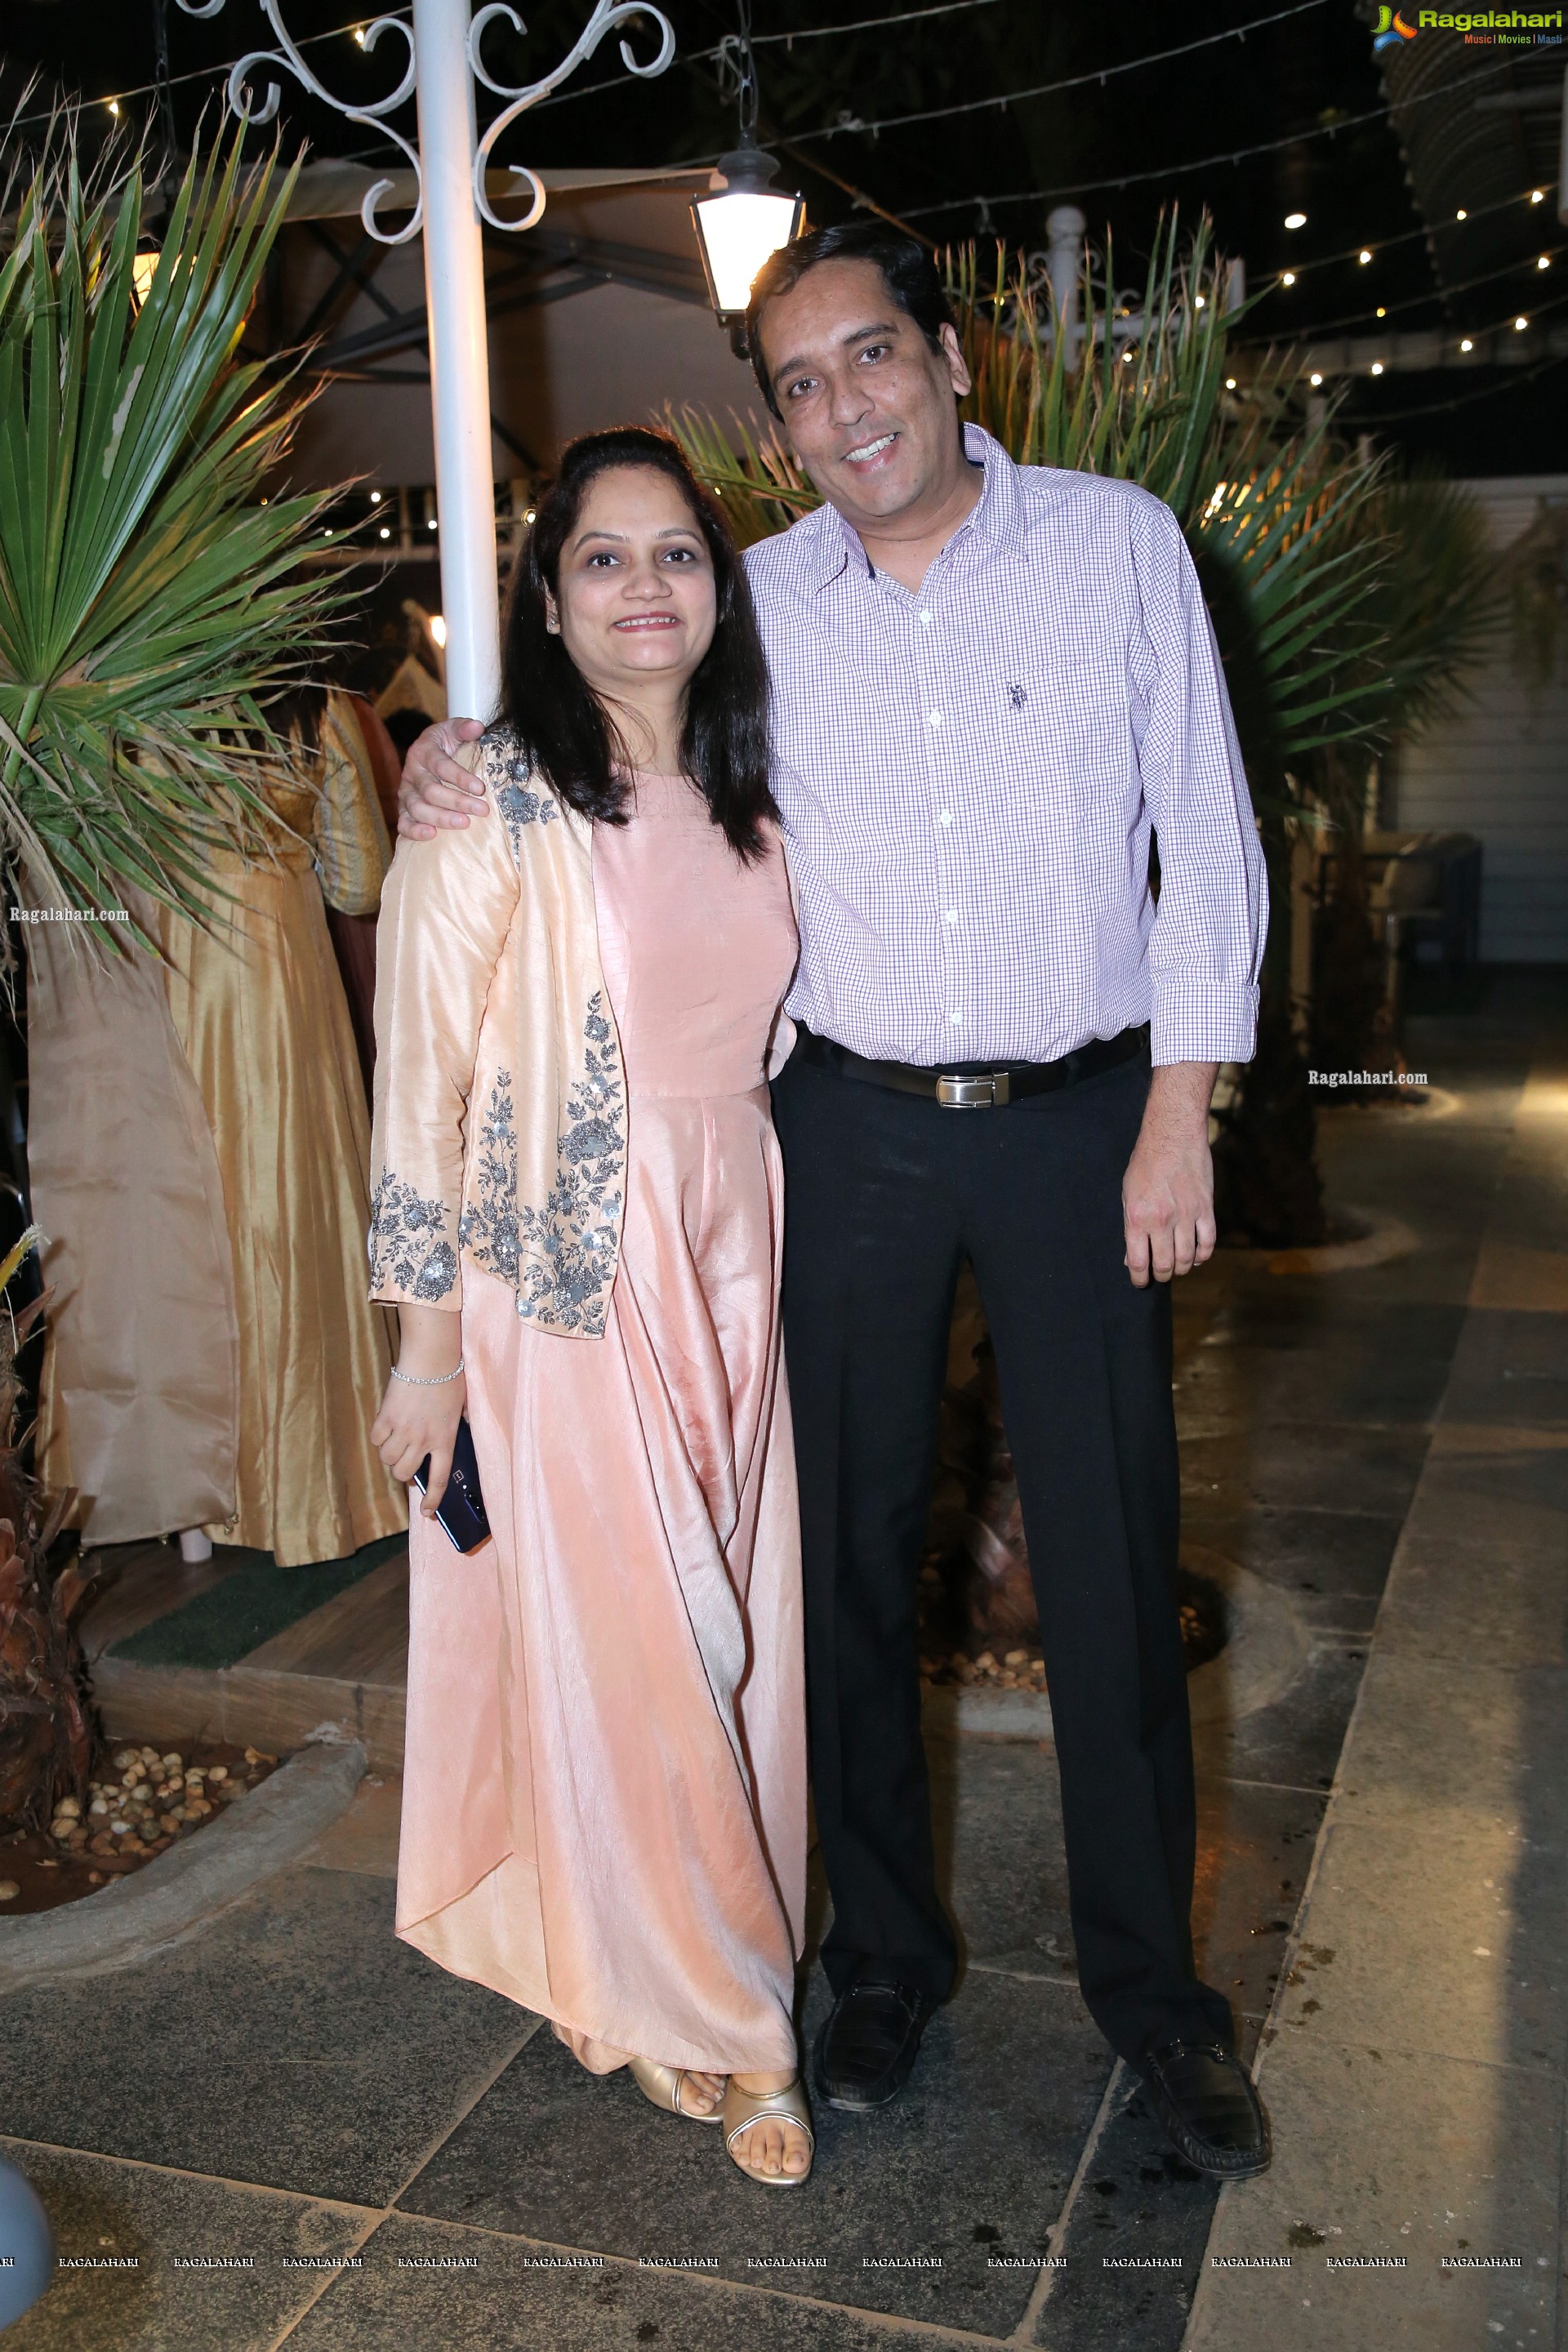 Rakshita & Chaitnya Bandola Ceremony at Makobrew World Coffee Bar